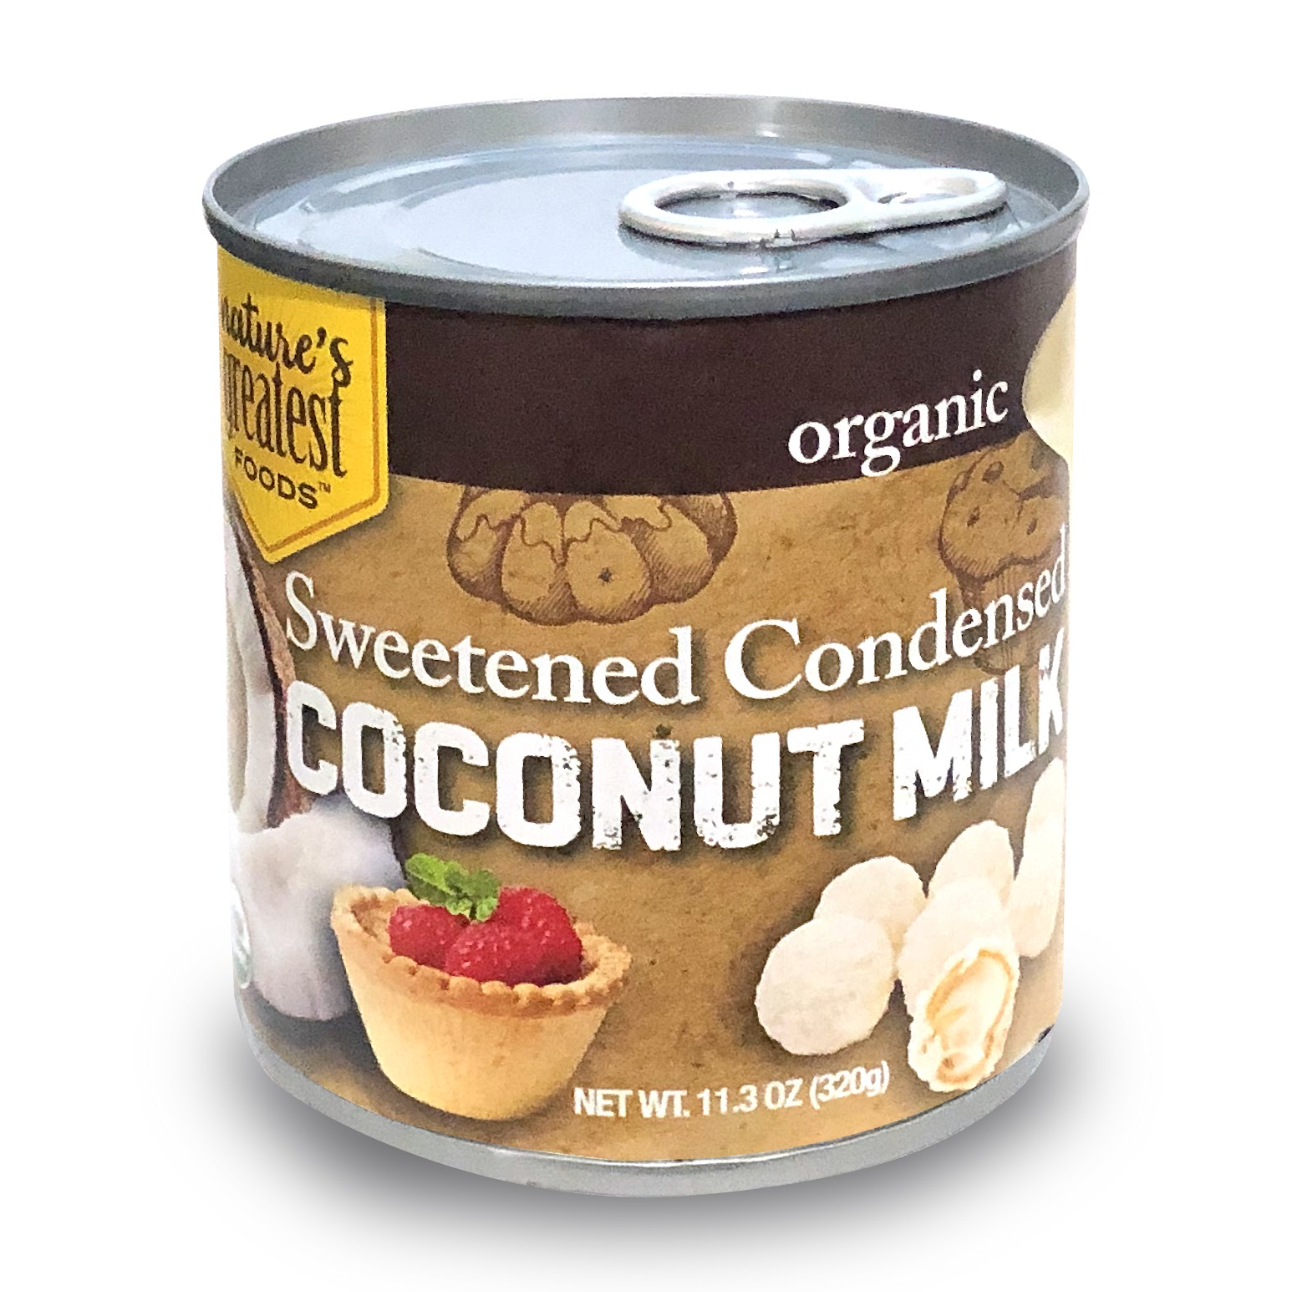 Nature's Greatest Foods Organic Sweetened Condensed Coconut Milk 12 units per case 7.4 oz